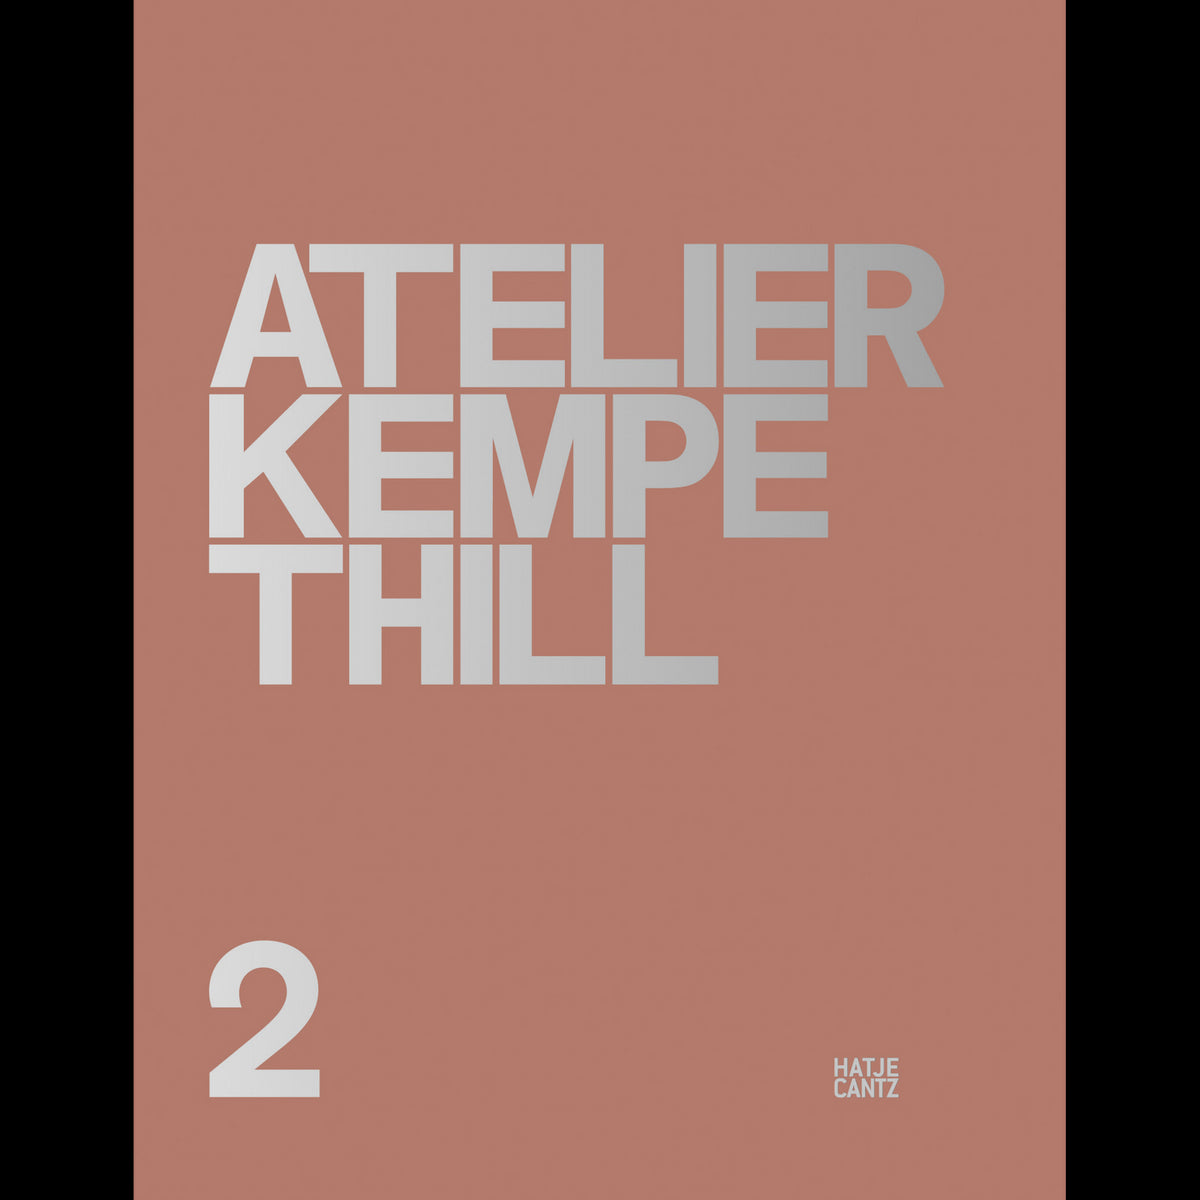 Coverbild Atelier Kempe Thill 2